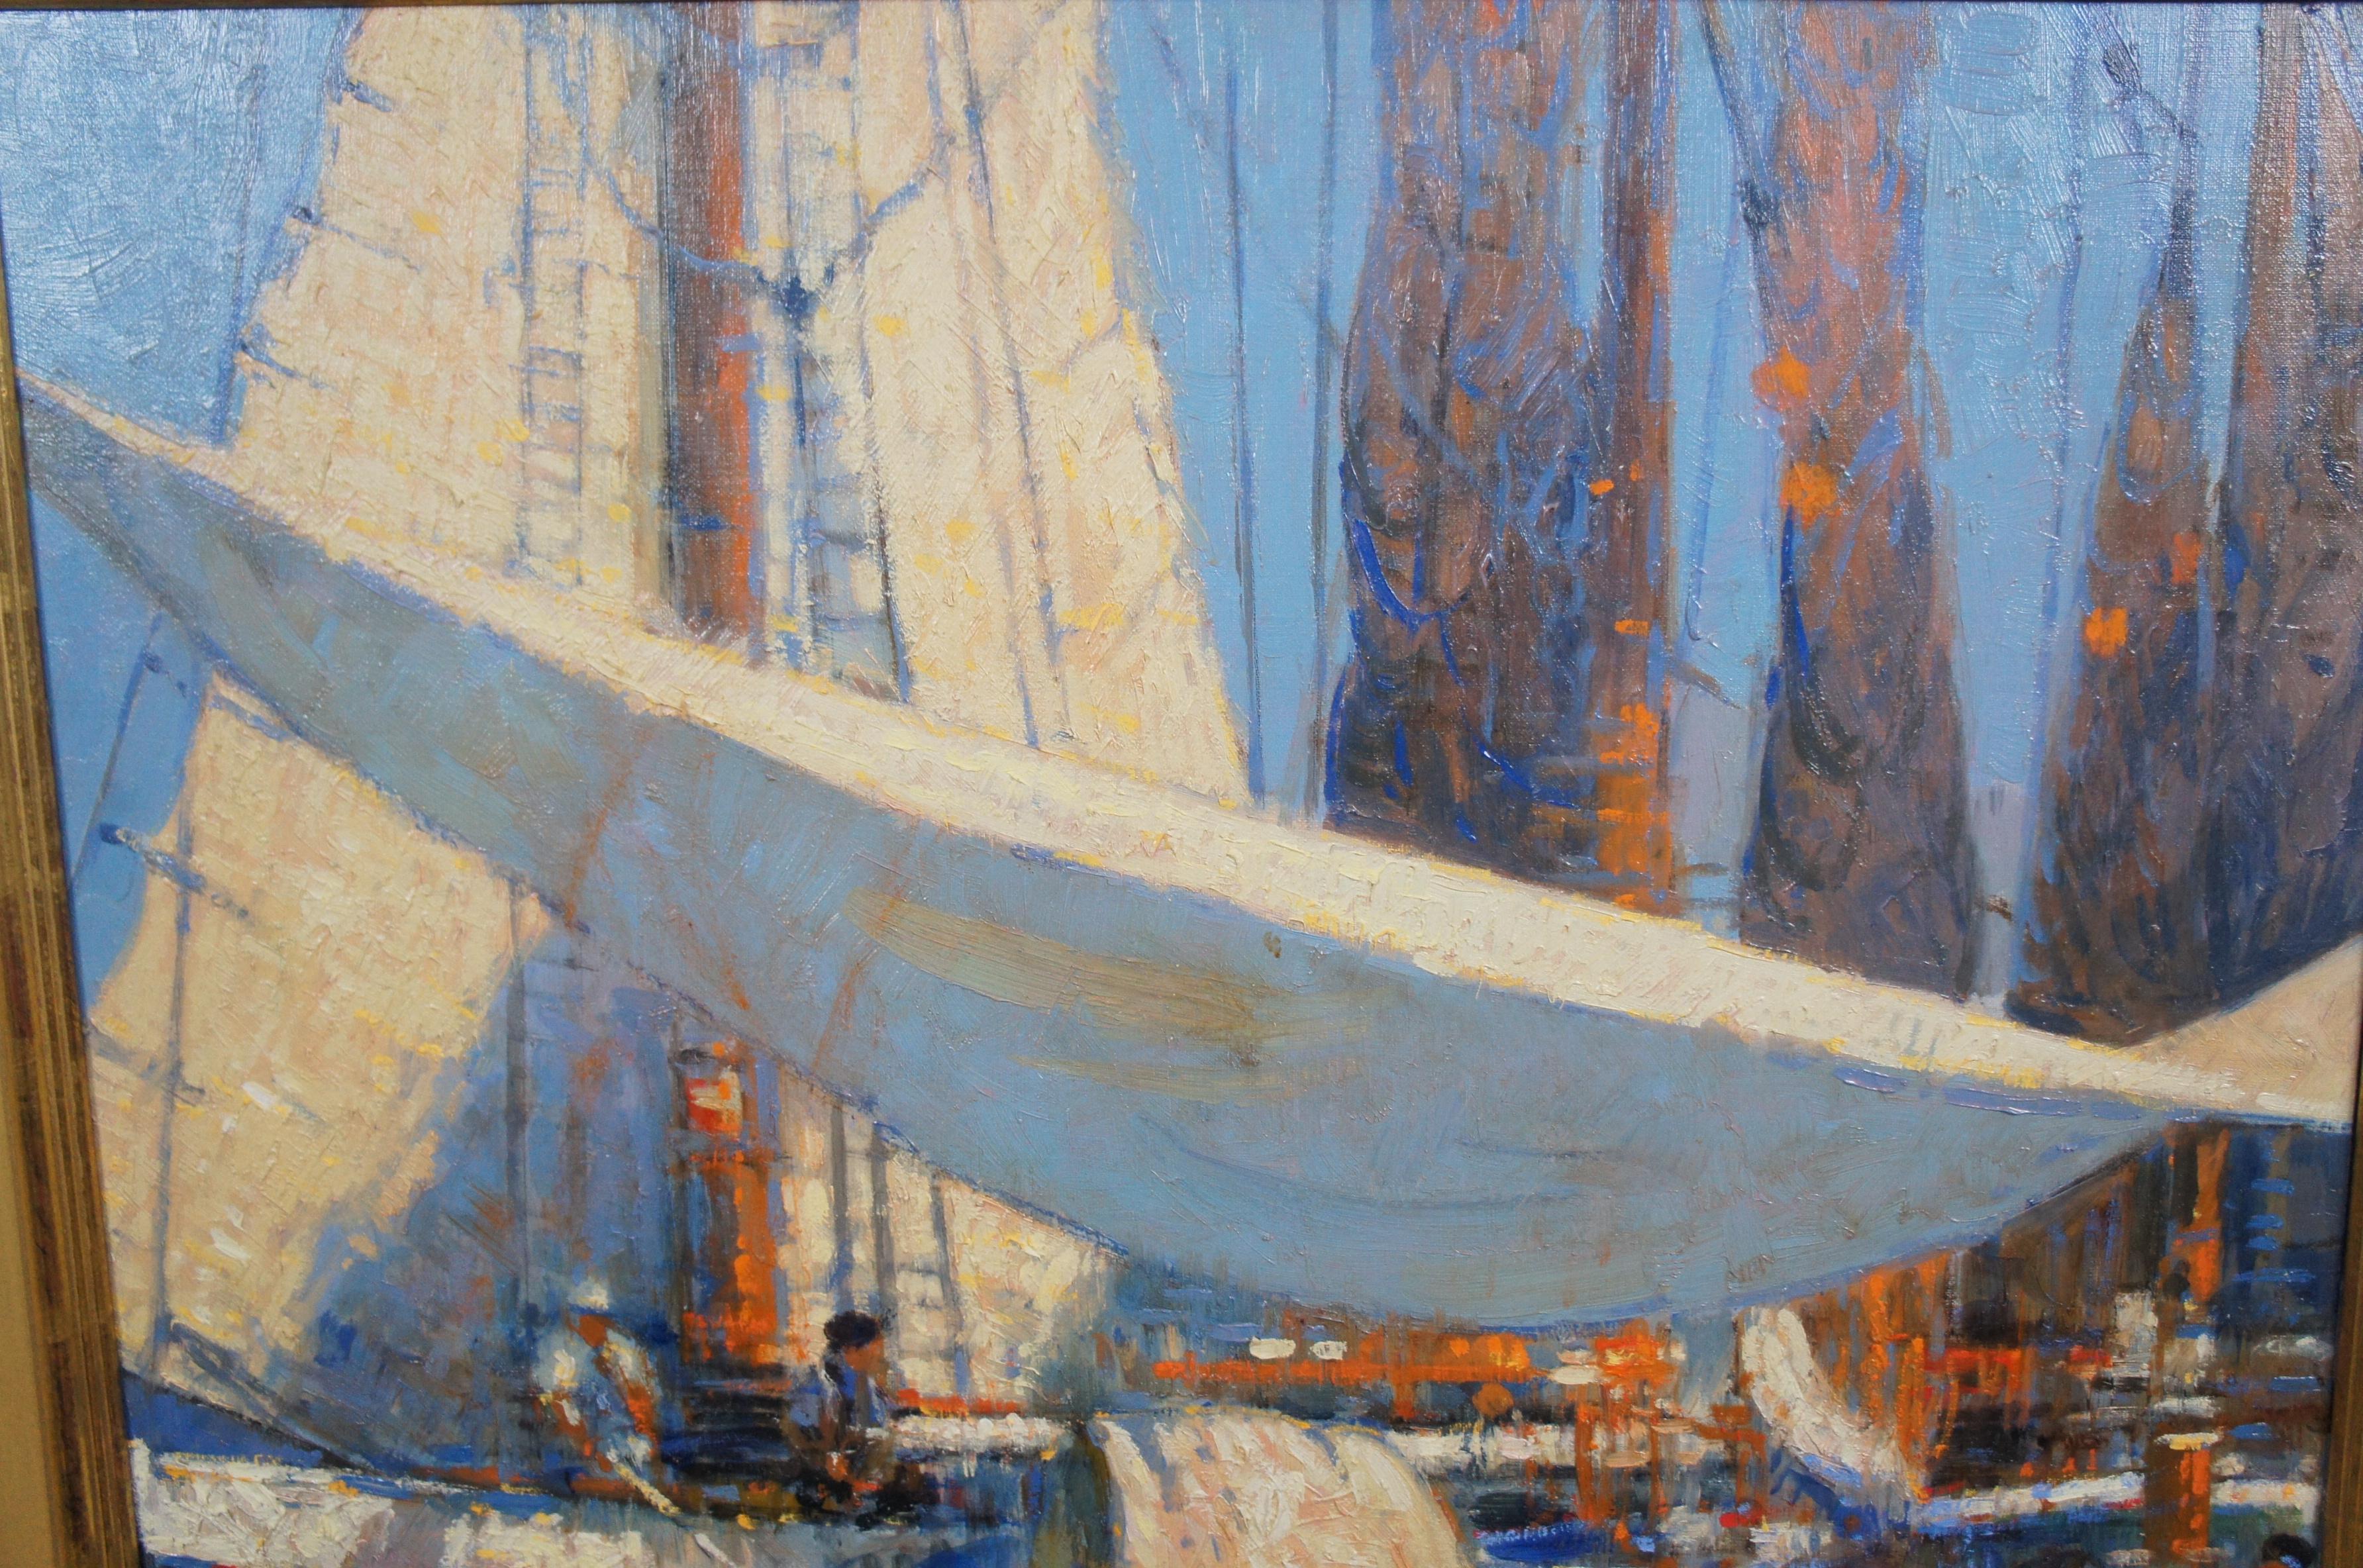 Canvas John Terelak 'Upland Game' Impressionist Oil Painting Dock Sailboats Harbor